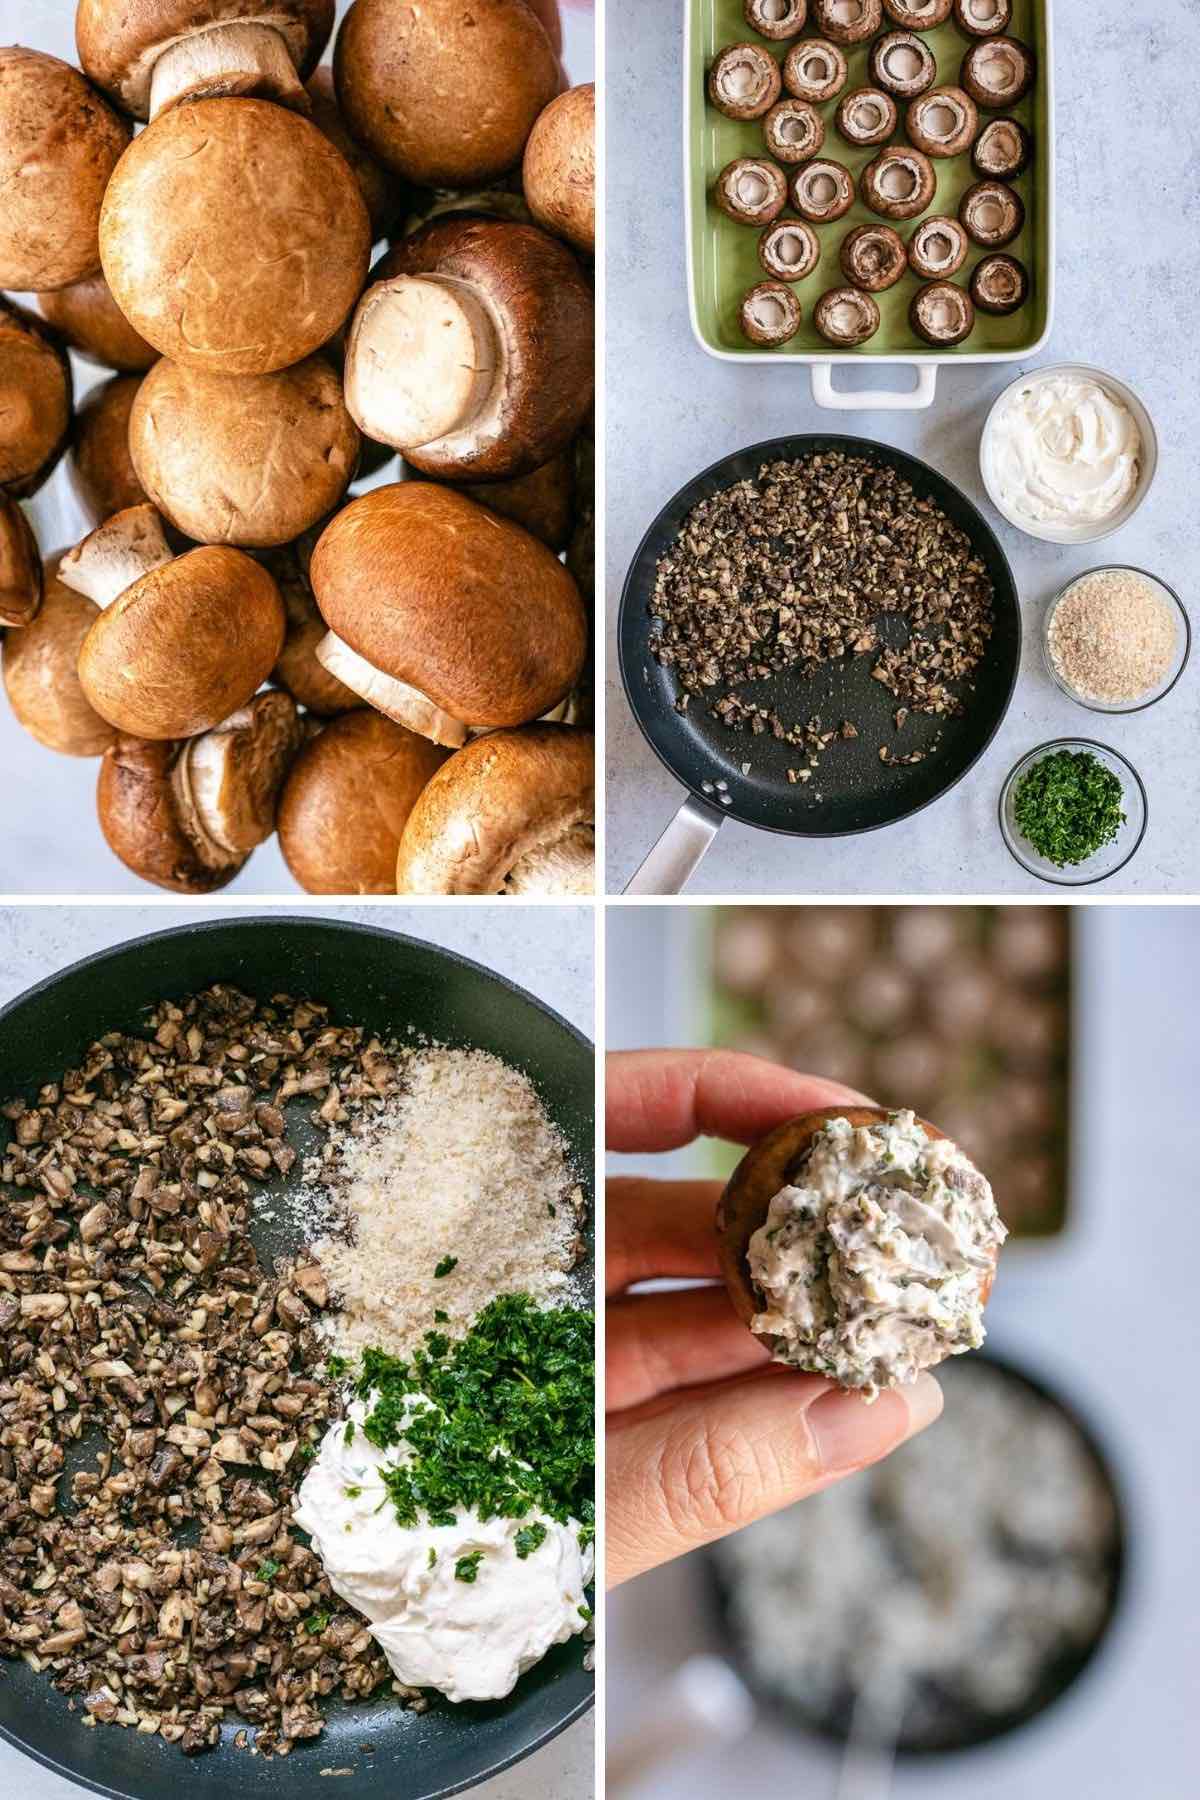 Healthy stuffed mushrooms collage